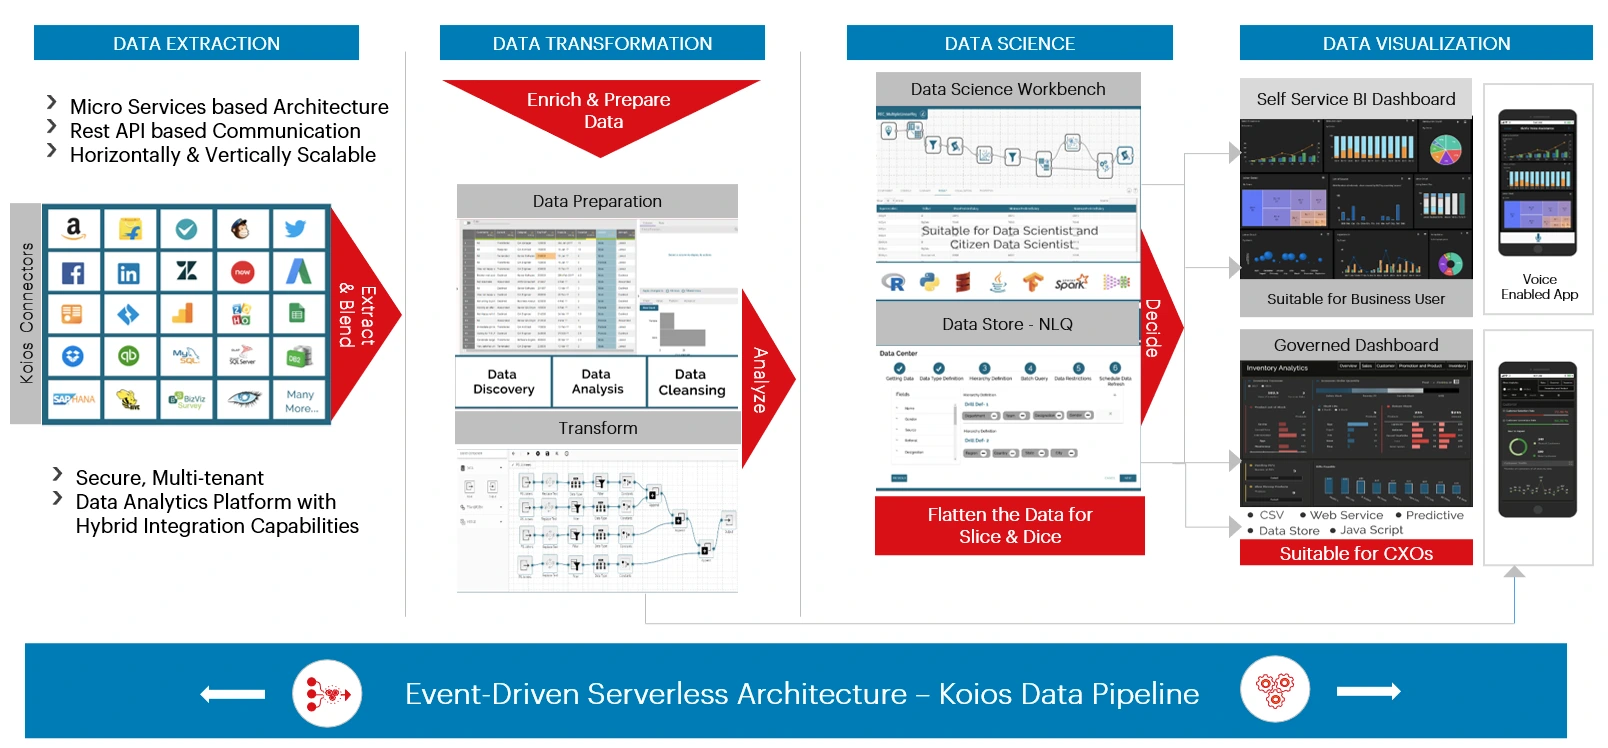 Event-Driven Serverless Architecture – iDAP Data Pipeline